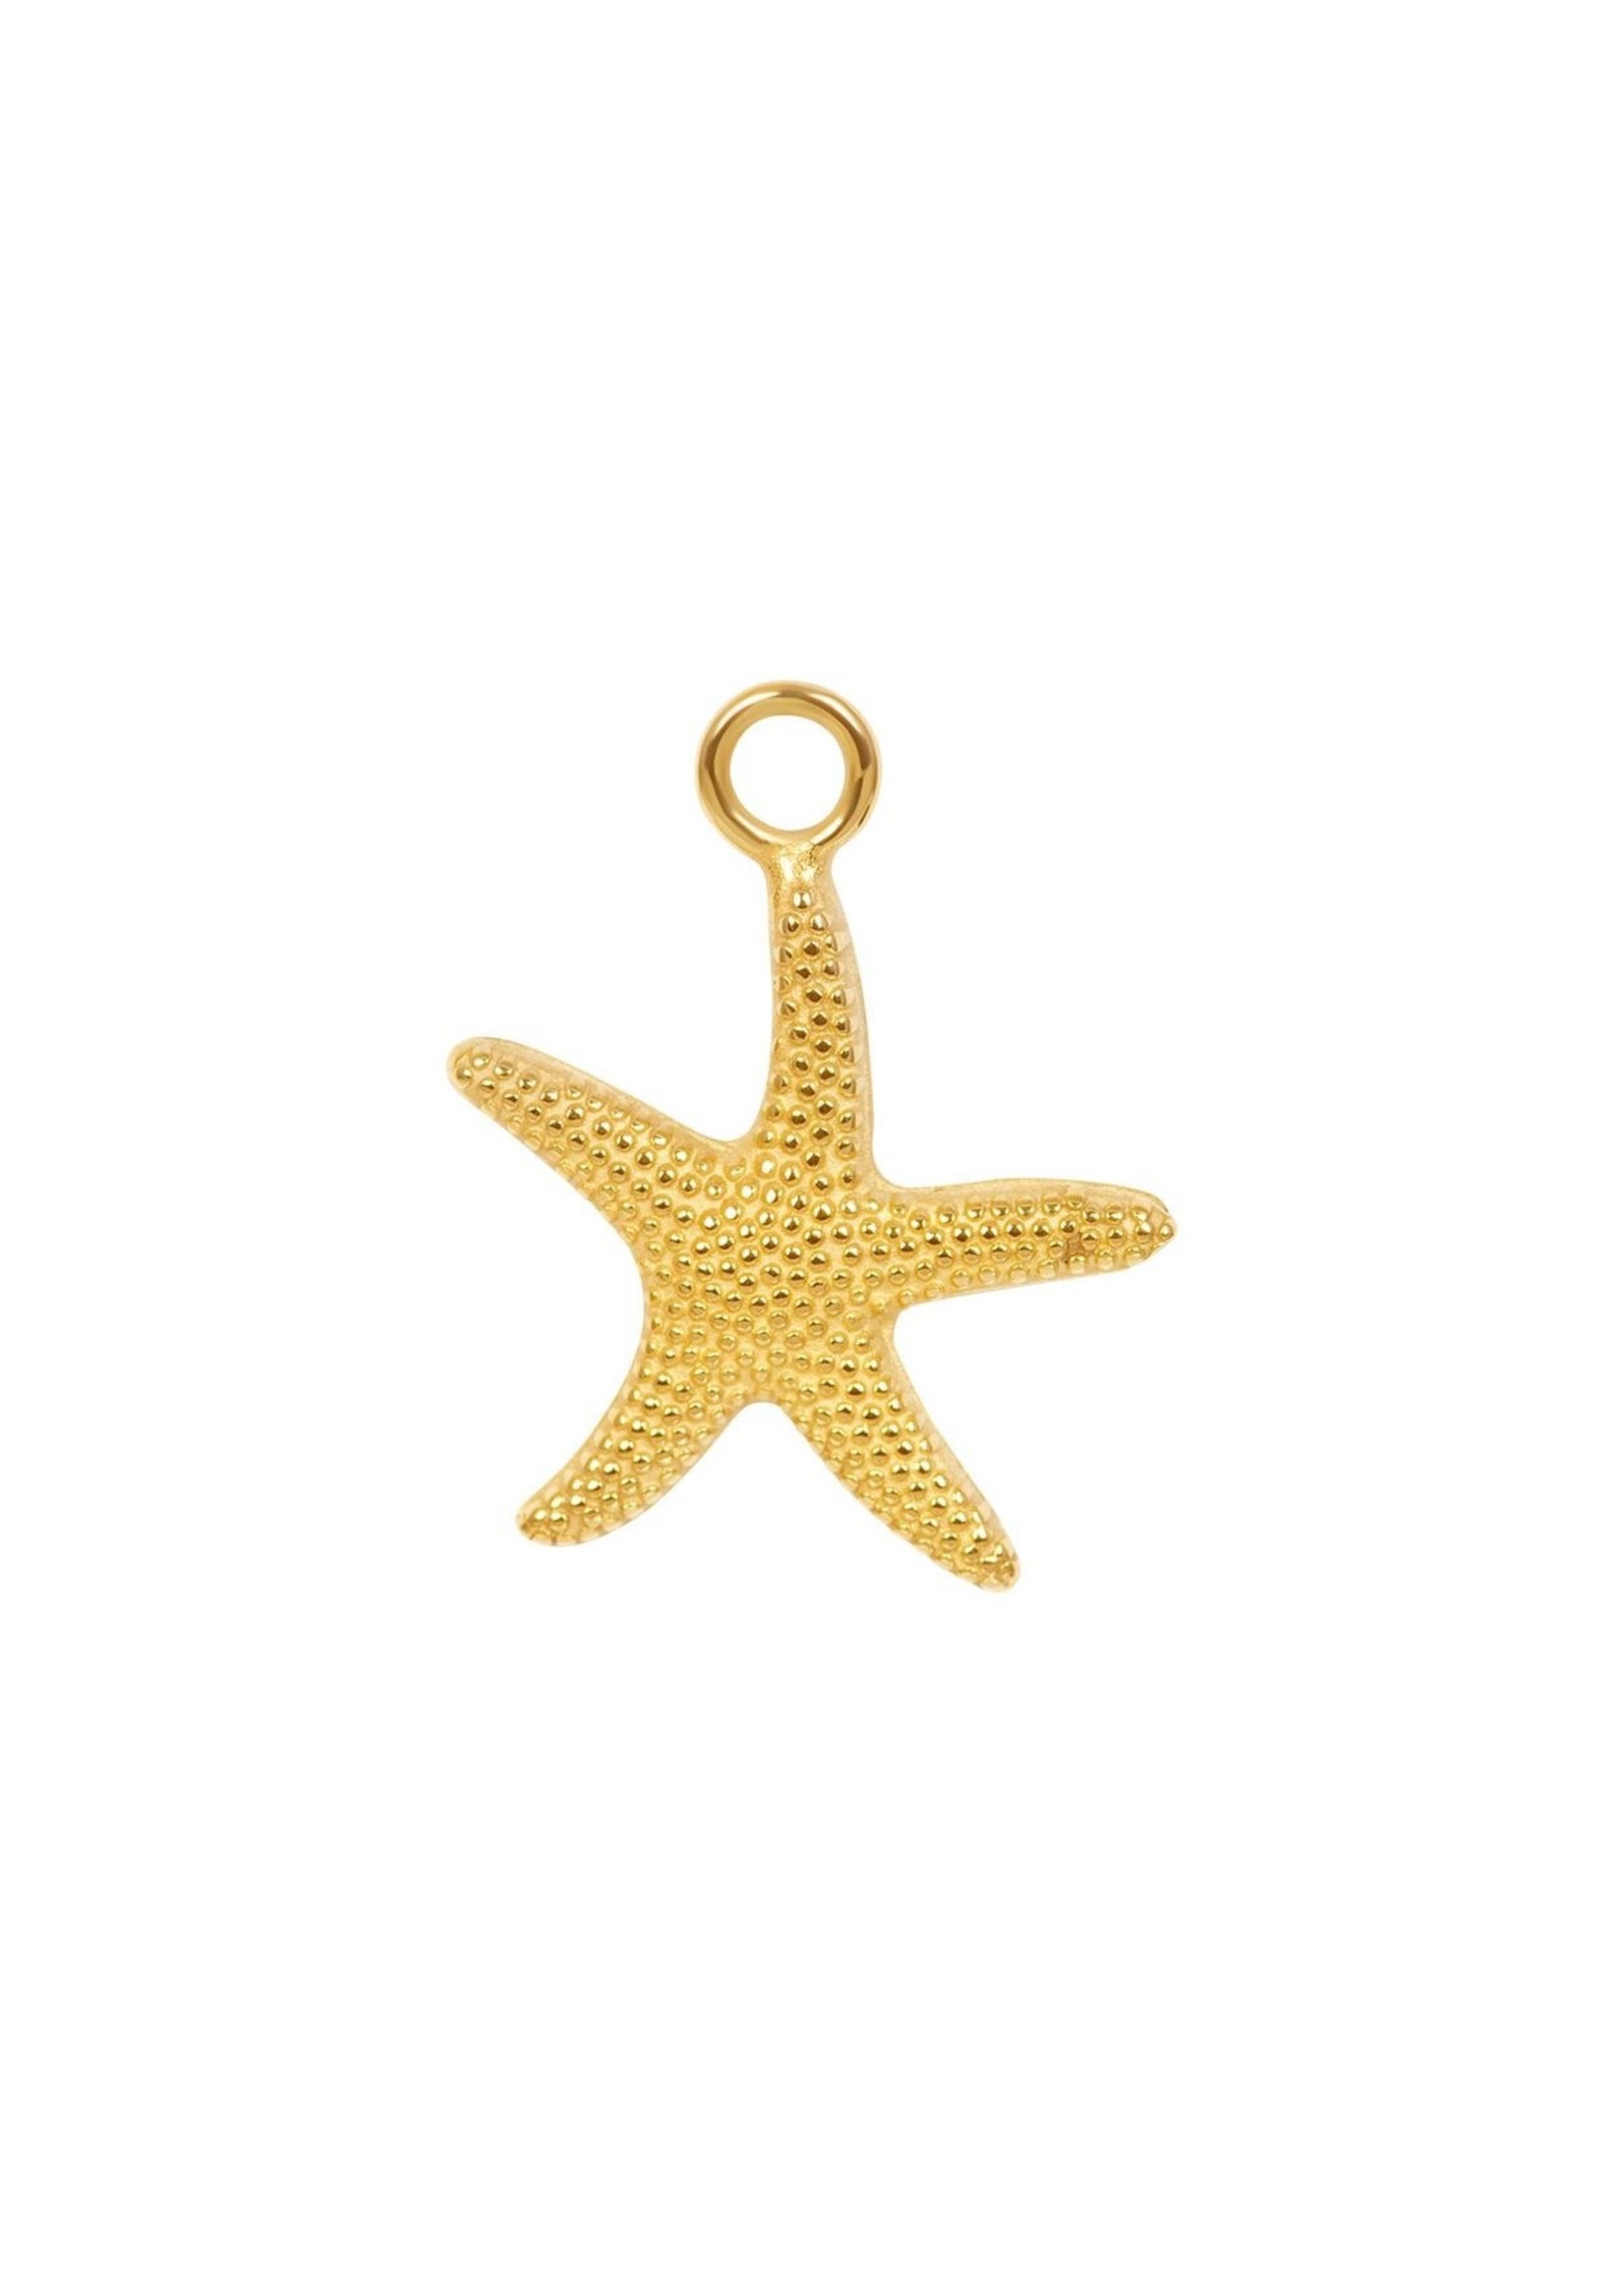 Ixxxi iXXXi Charm Sea Star Gold Color - C43013-01